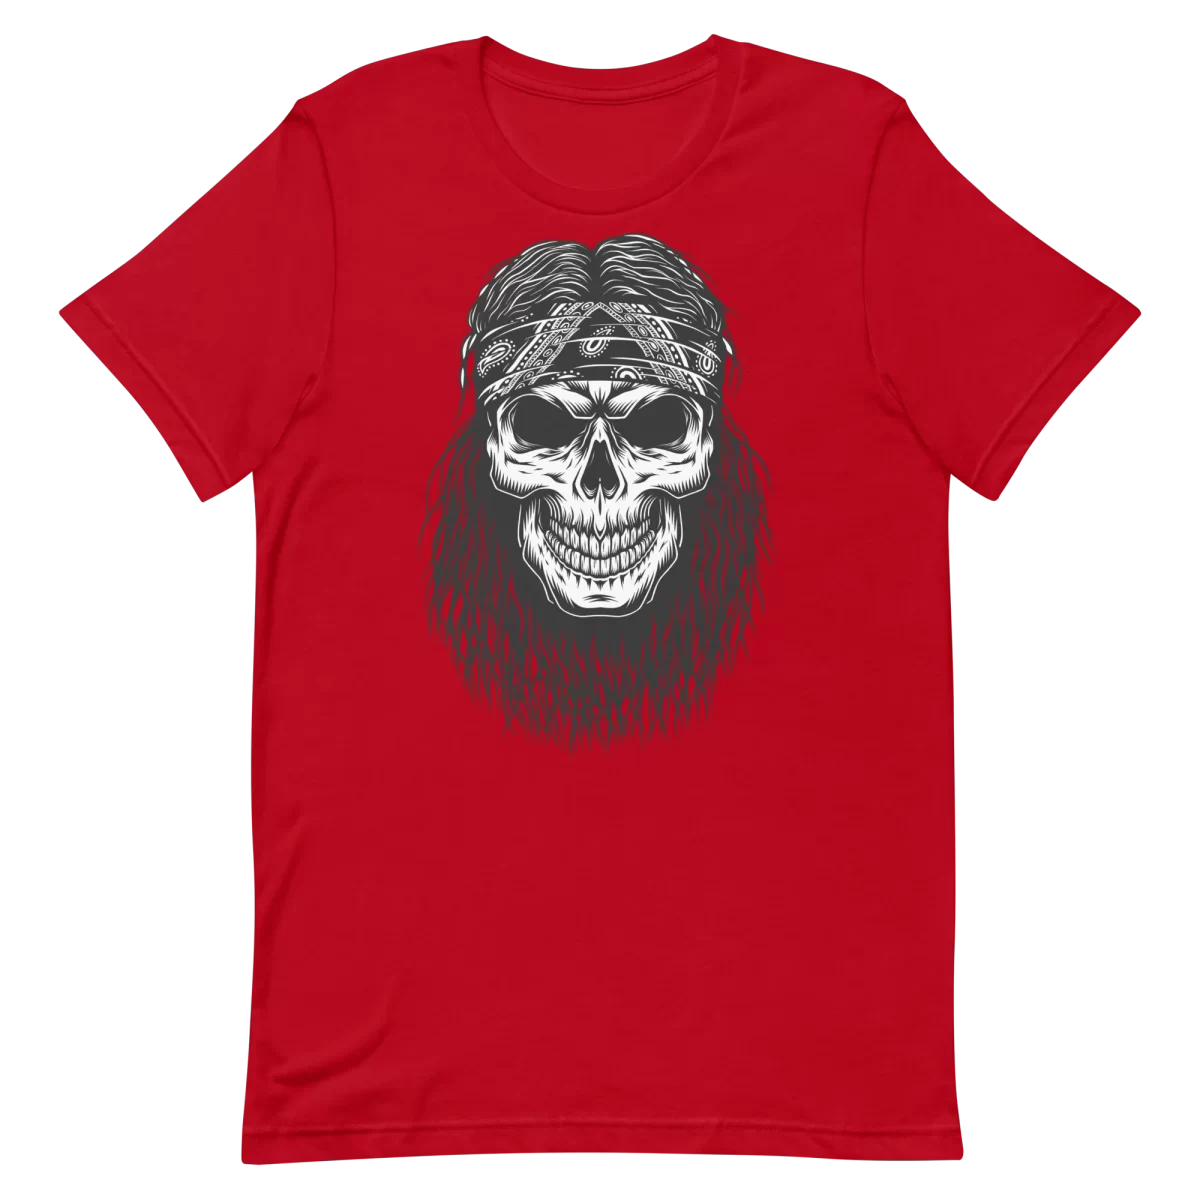 Unisex T-Shirt - Rock'n Roll Skeleton - Red